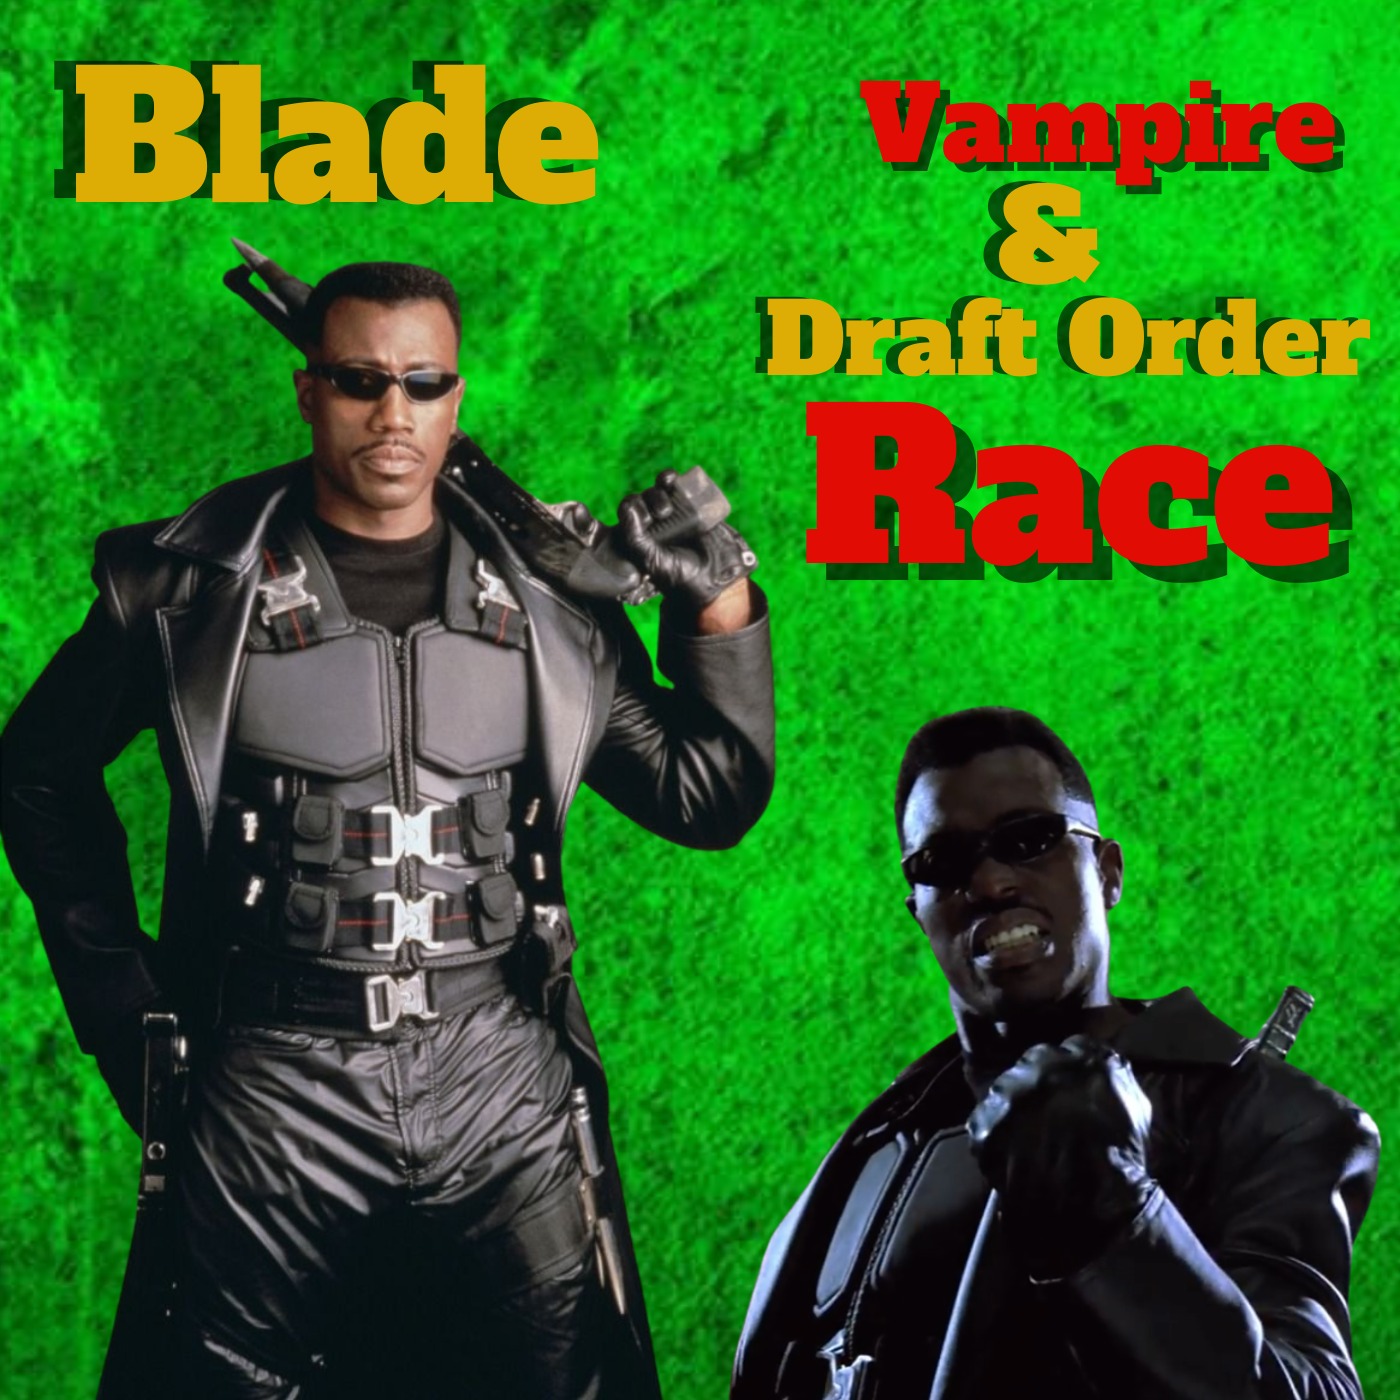 Blade Vampire League Vampire & Draft Order Race Image